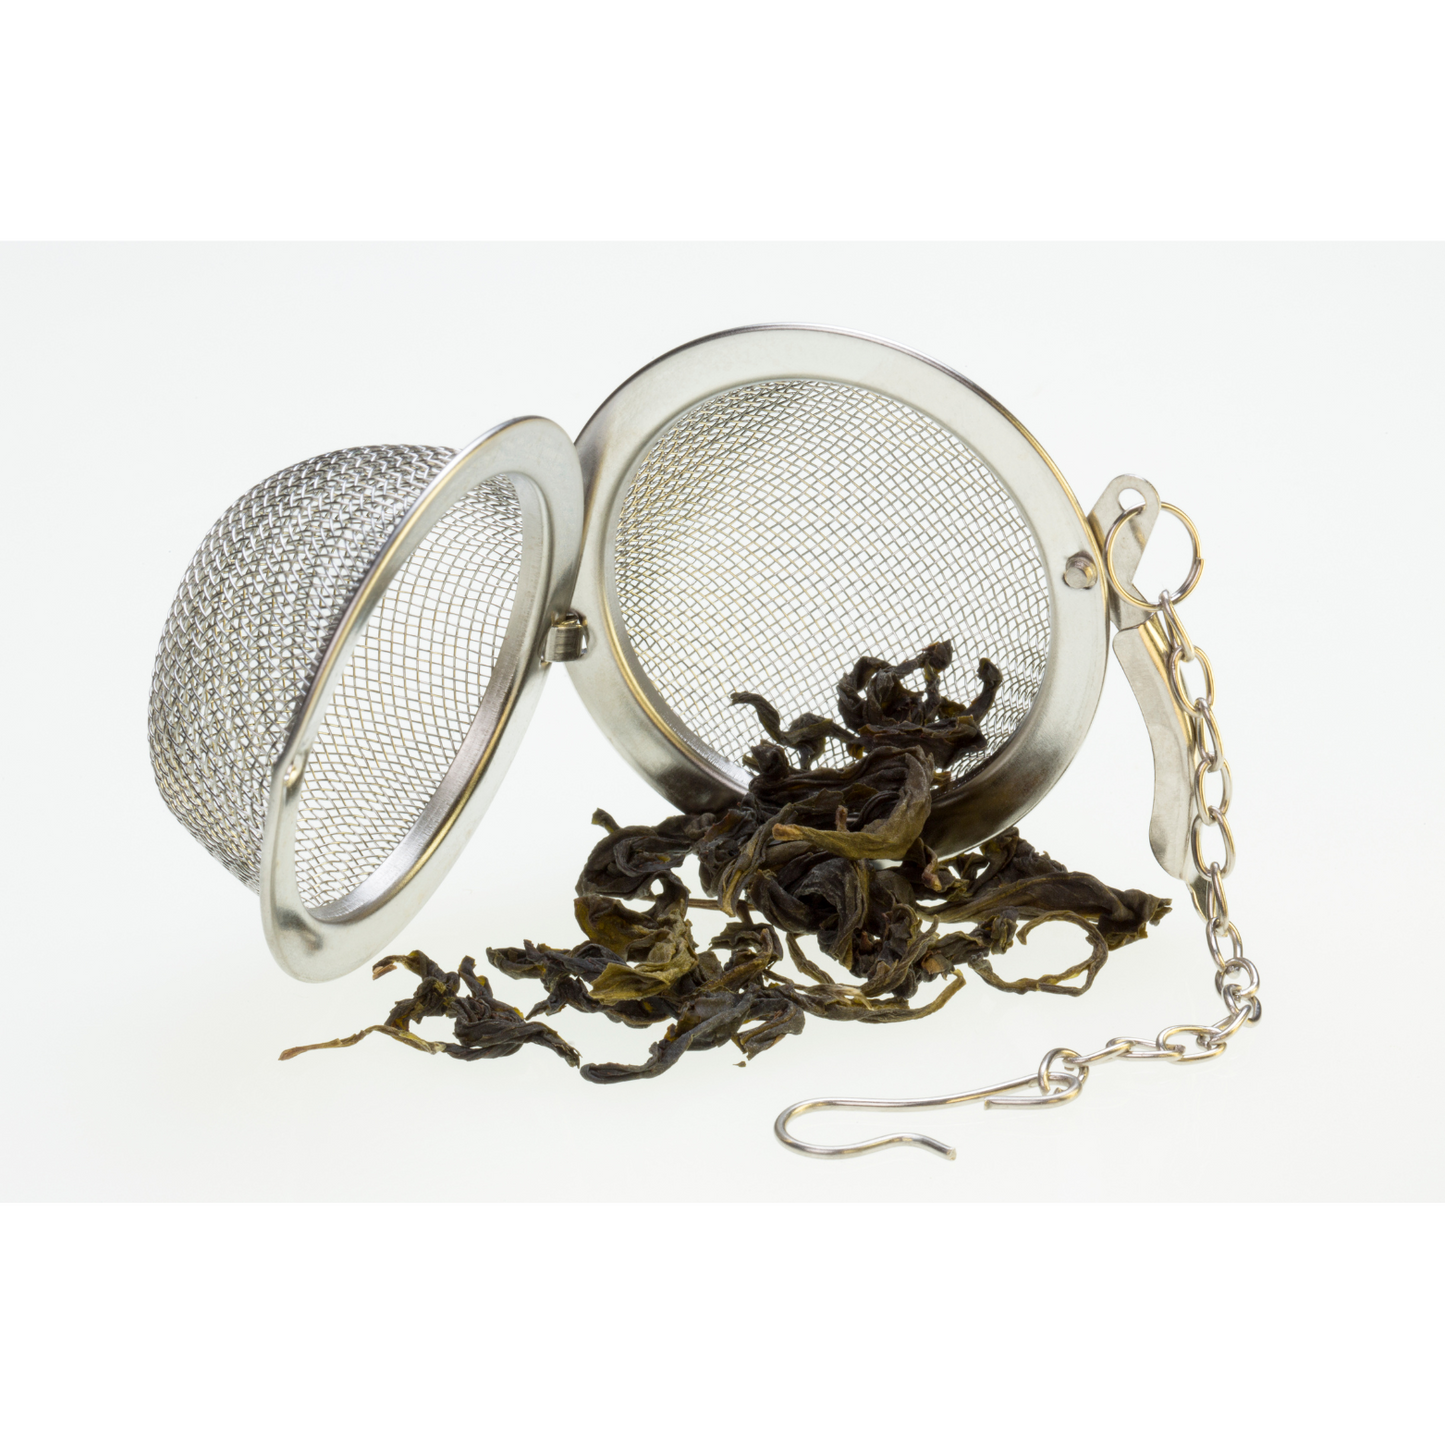 Tea Infuser Mesh Ball for Brewing Loose Leaf Tea 2."